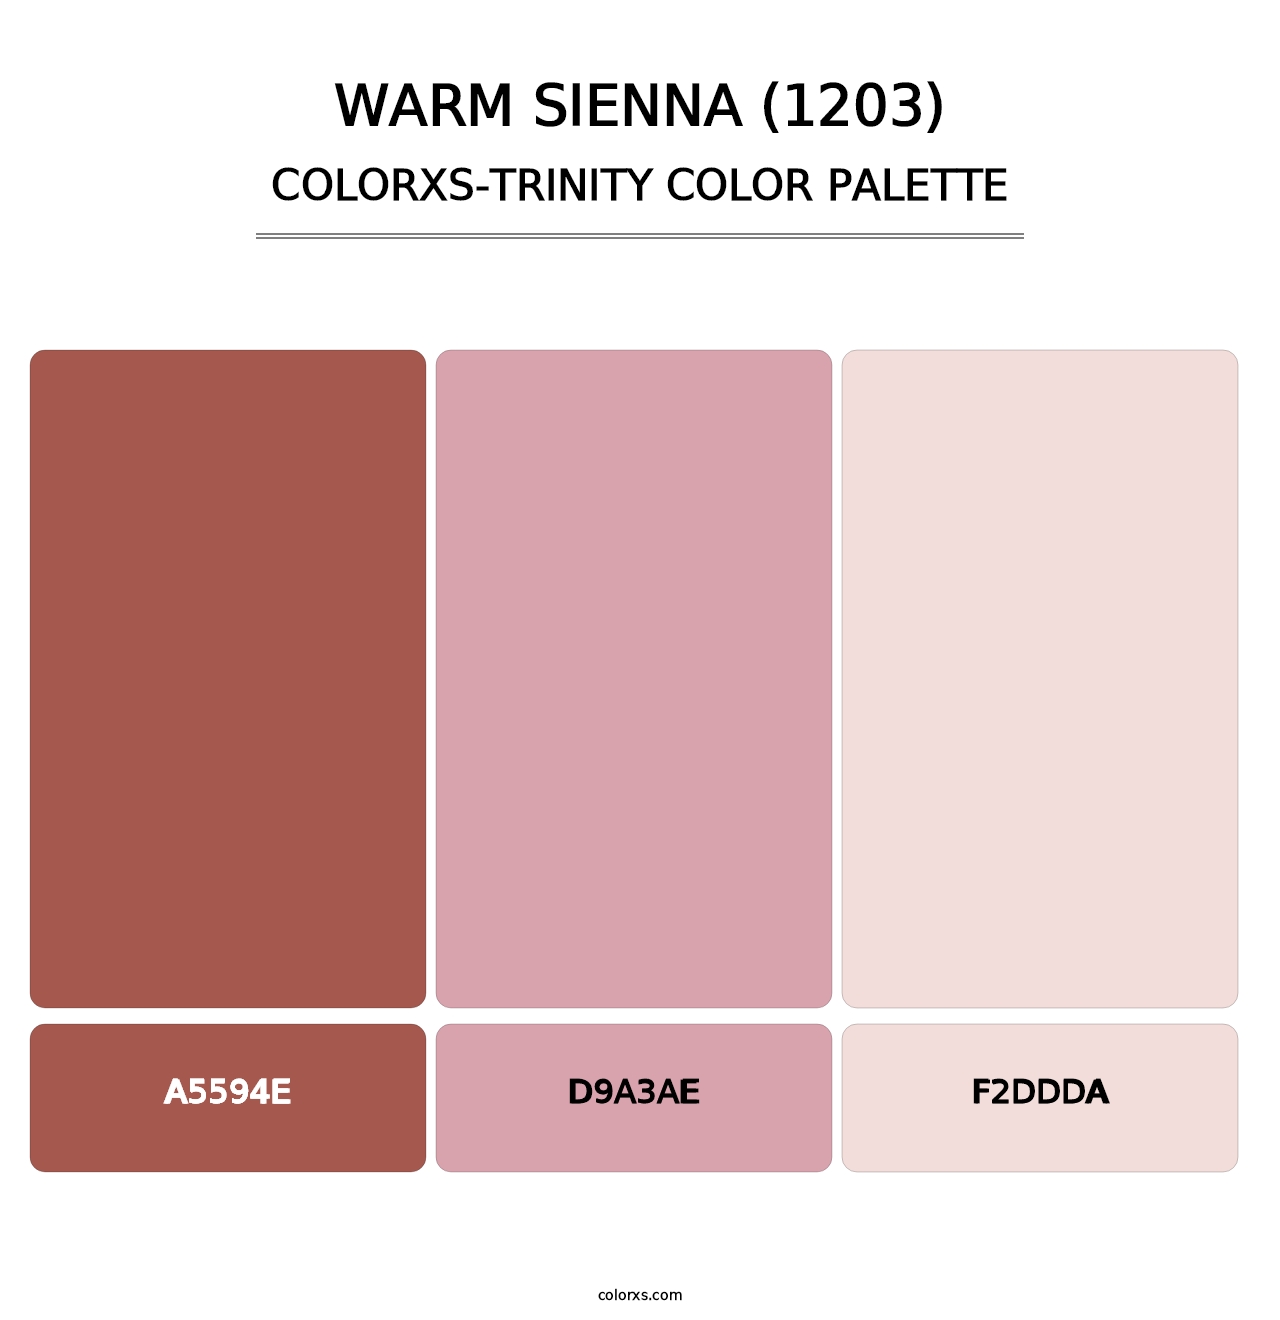 Warm Sienna (1203) - Colorxs Trinity Palette